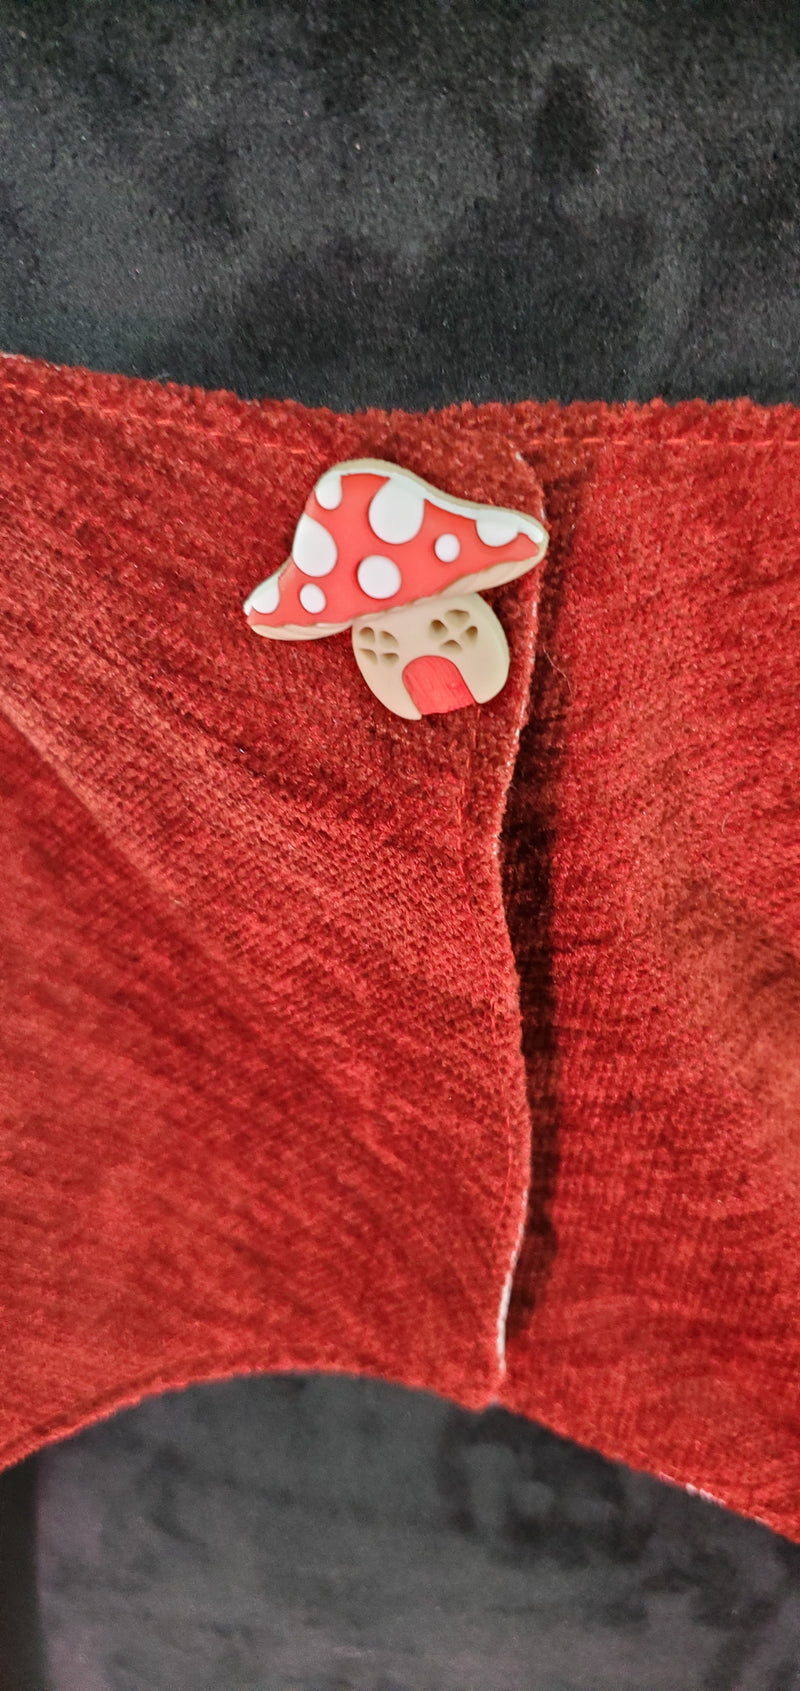 Custom Made Red and White Mushrooms for Mushroom Ladies